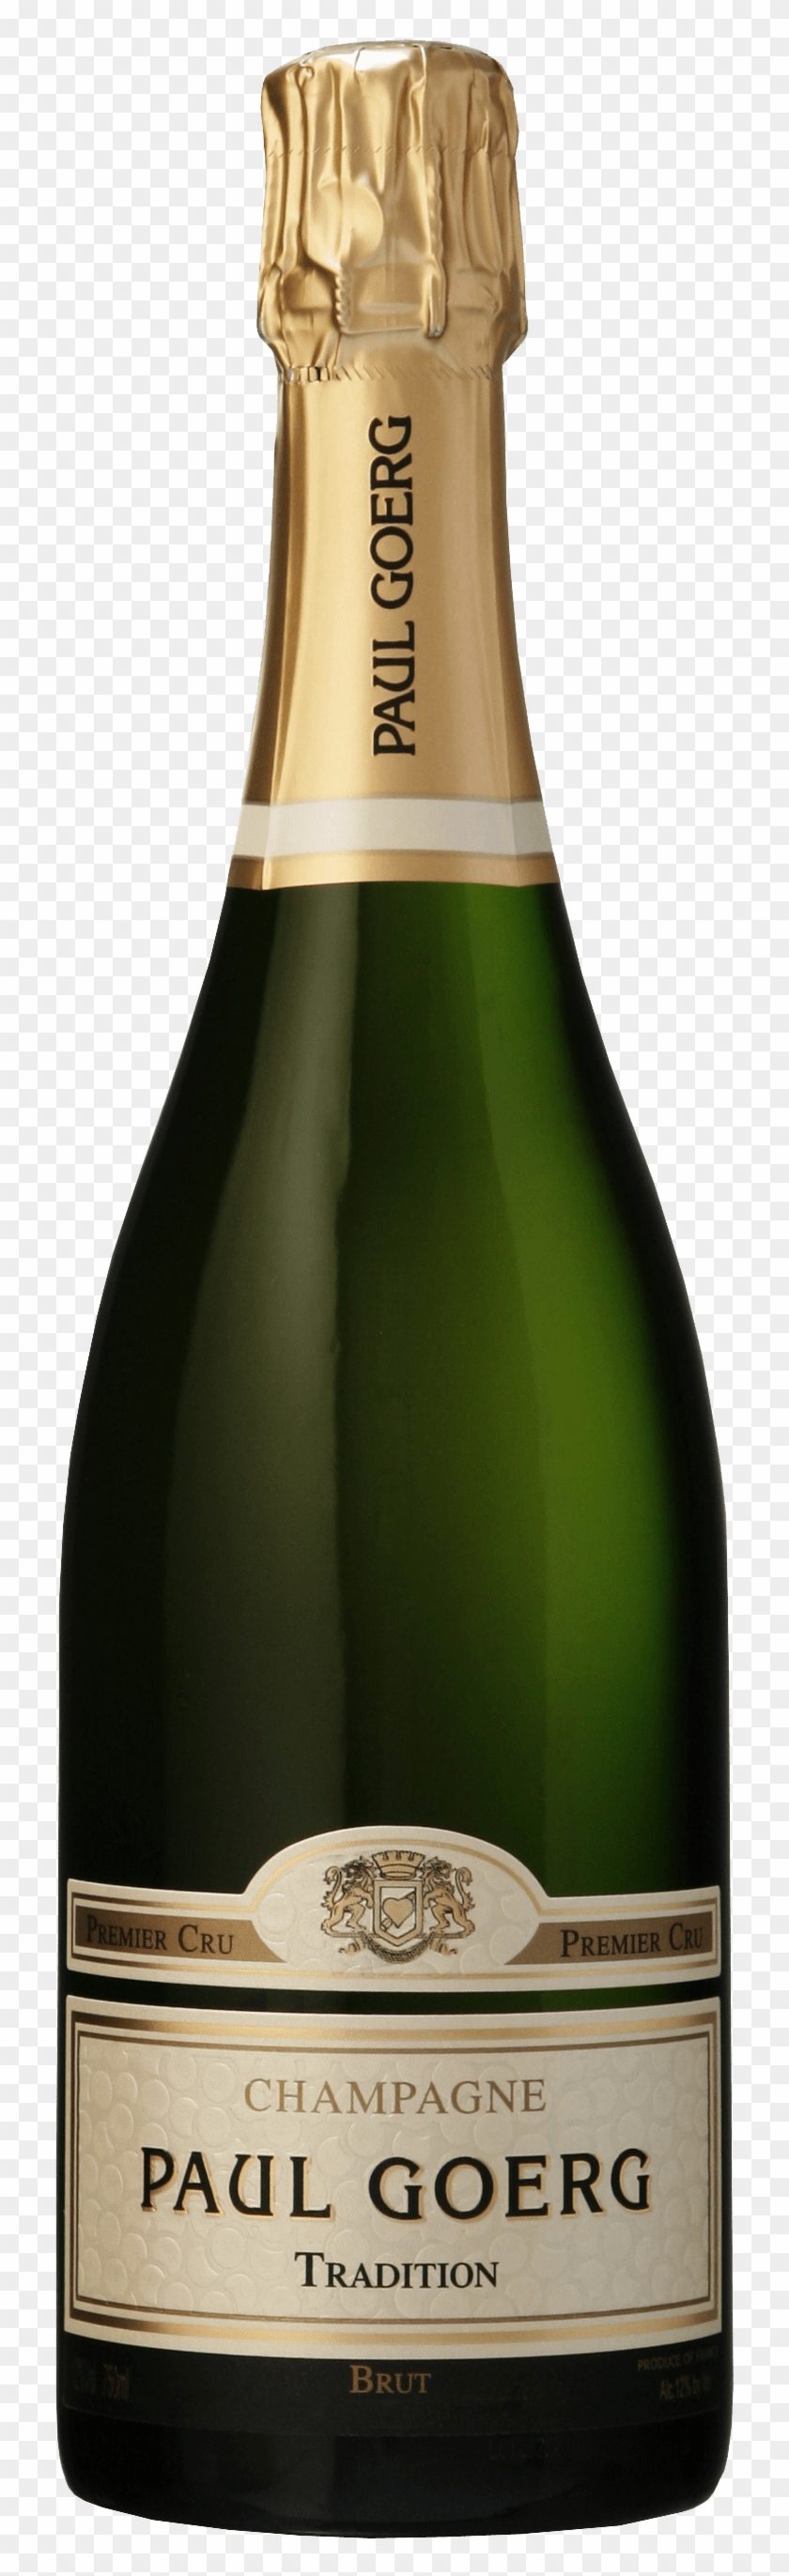 Champagne Paul Goerg Tradition Brut - Delamotte Brut Blanc De Blancs 2007 Clipart #1021593